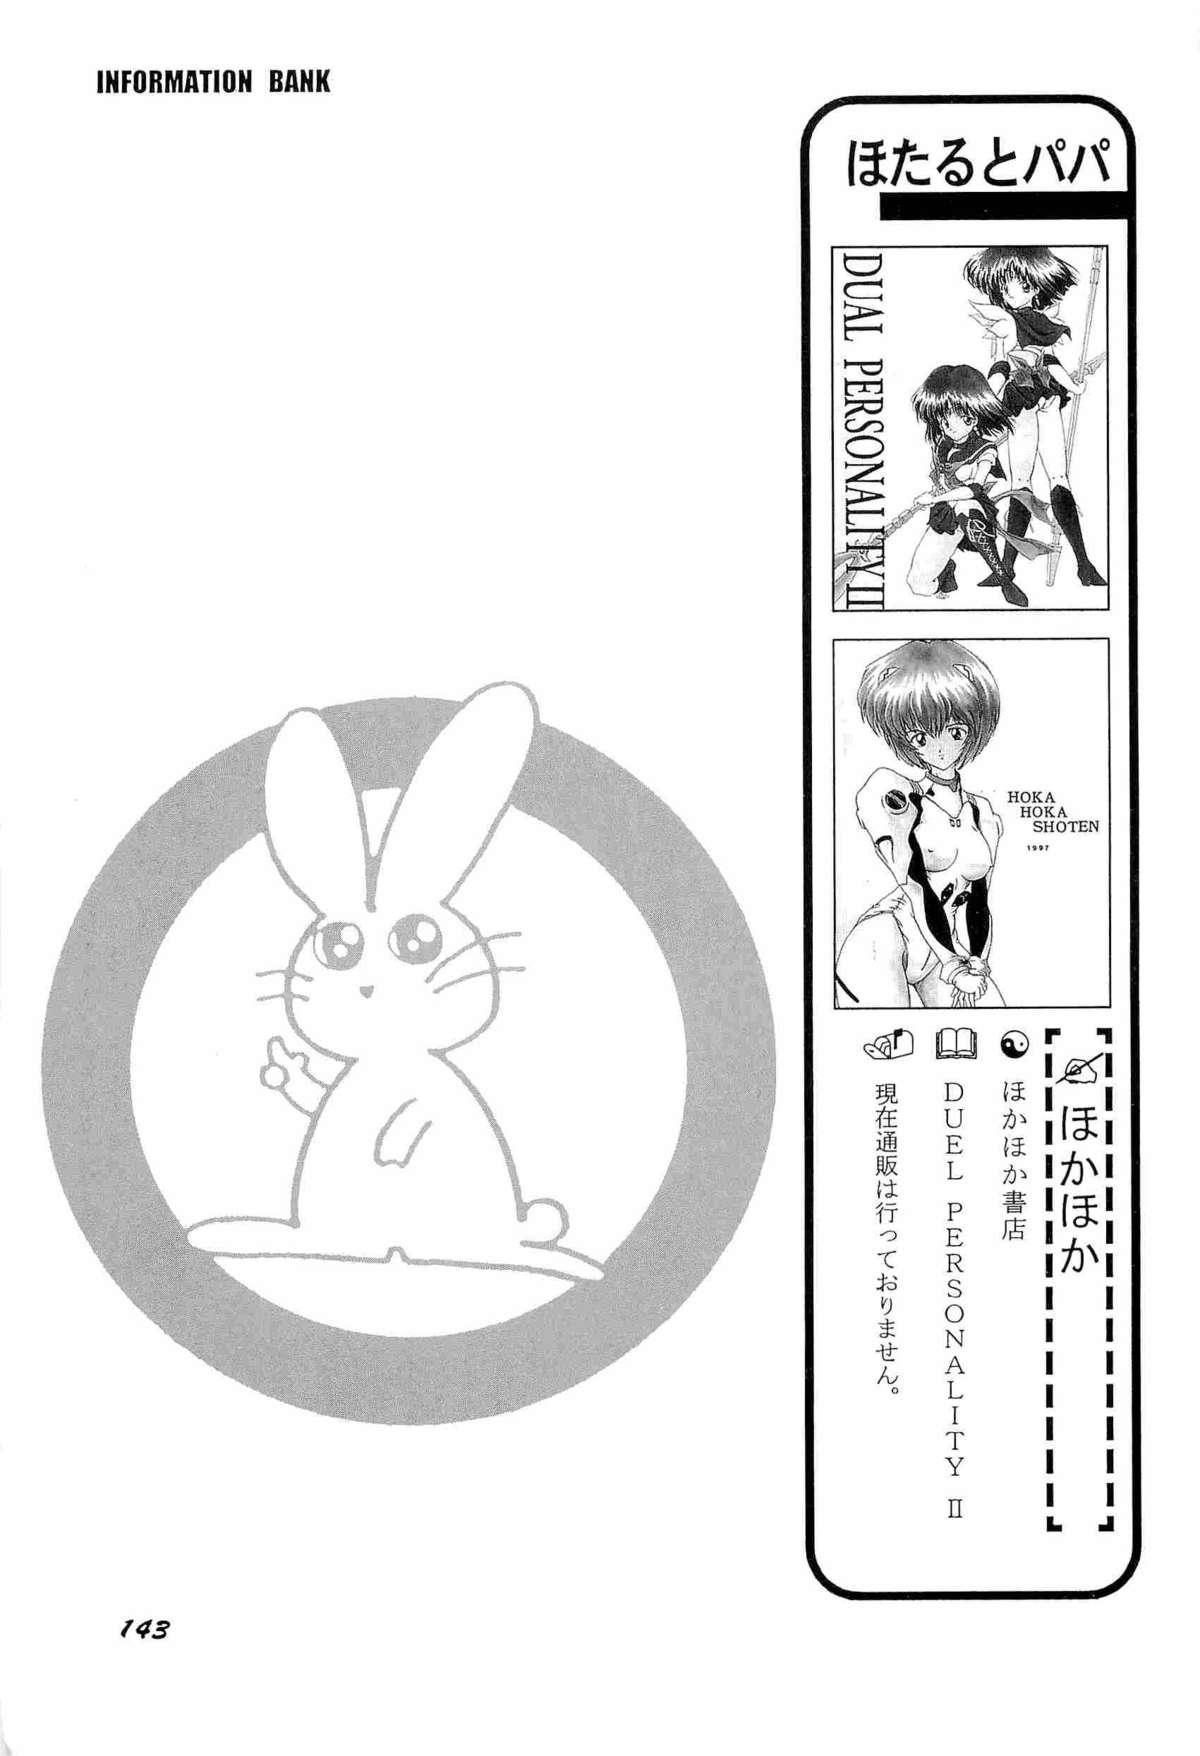 Tall Aniparo Miki 9 - Neon genesis evangelion Sailor moon Slayers Saber marionette Analplay - Page 146